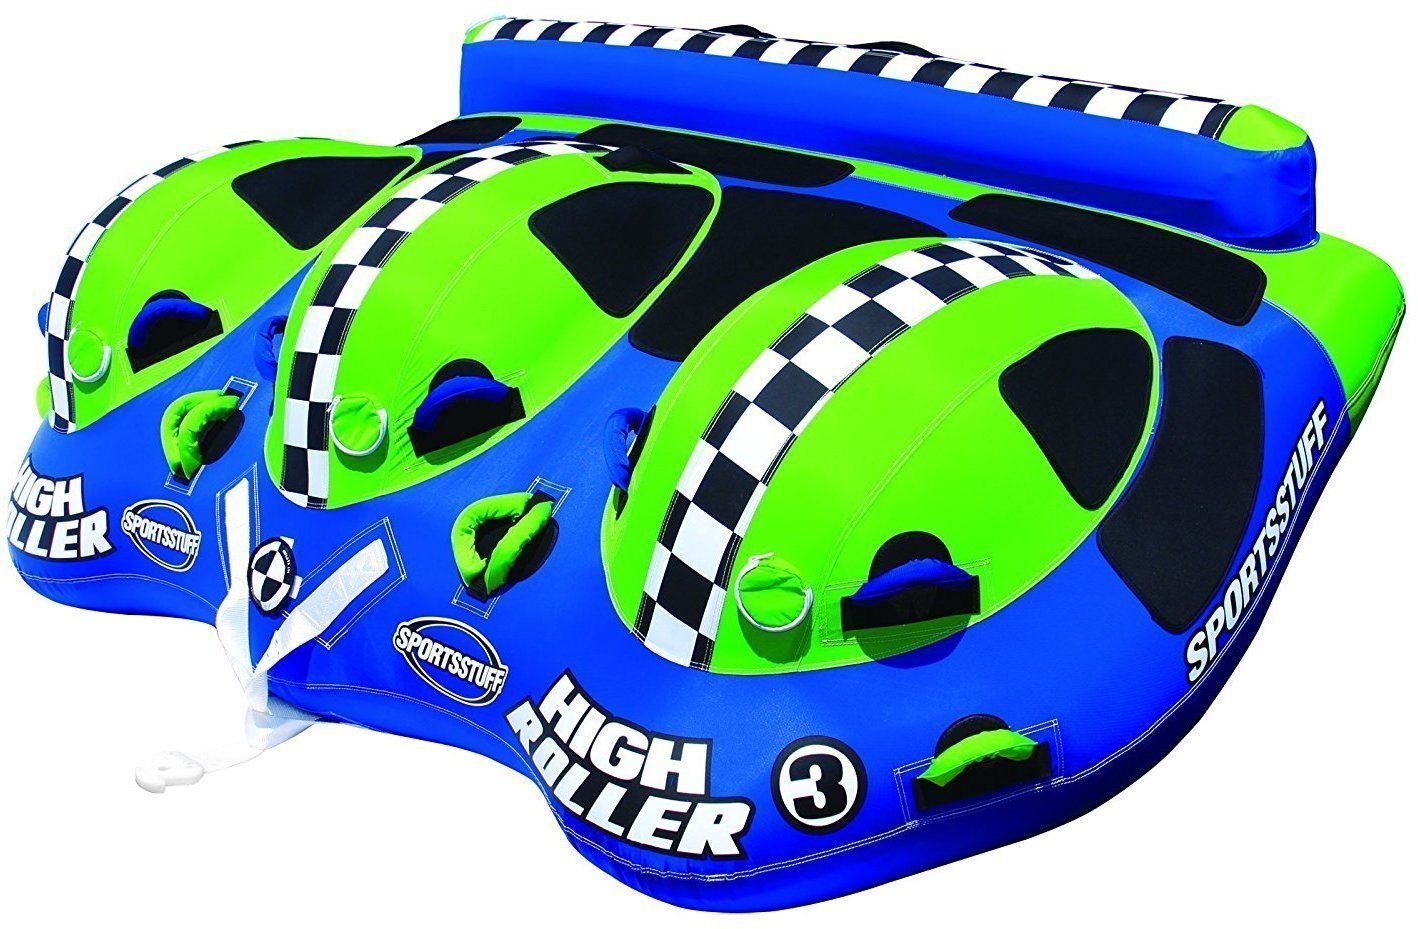 Надуваем пояс / Лодка / Банан  Sportsstuff Towable High Roller 3 Personen Blue/Green